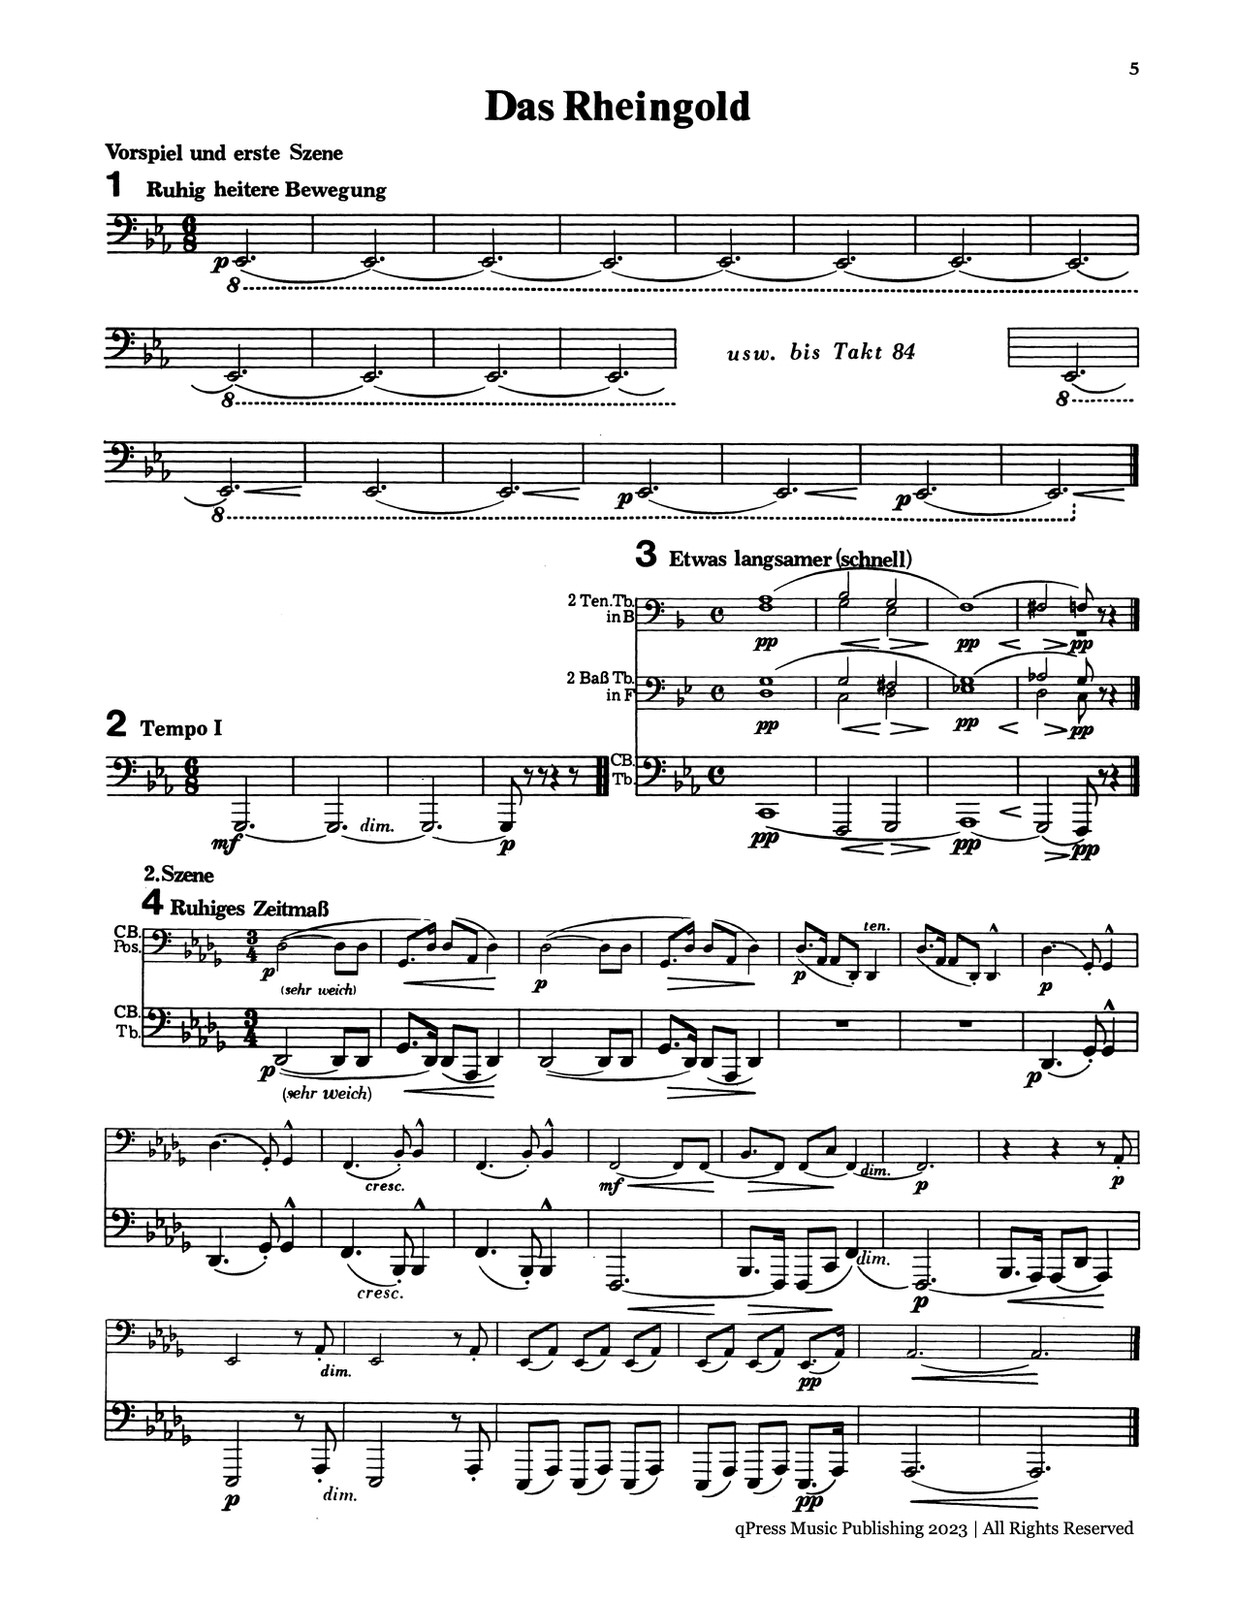 Tuba　Wagner　for　of　by　Nibelungen)　Hoppert,　Manfred,　Orchestra　Richard　qPress　Studies　Ring　(The　Wagner,